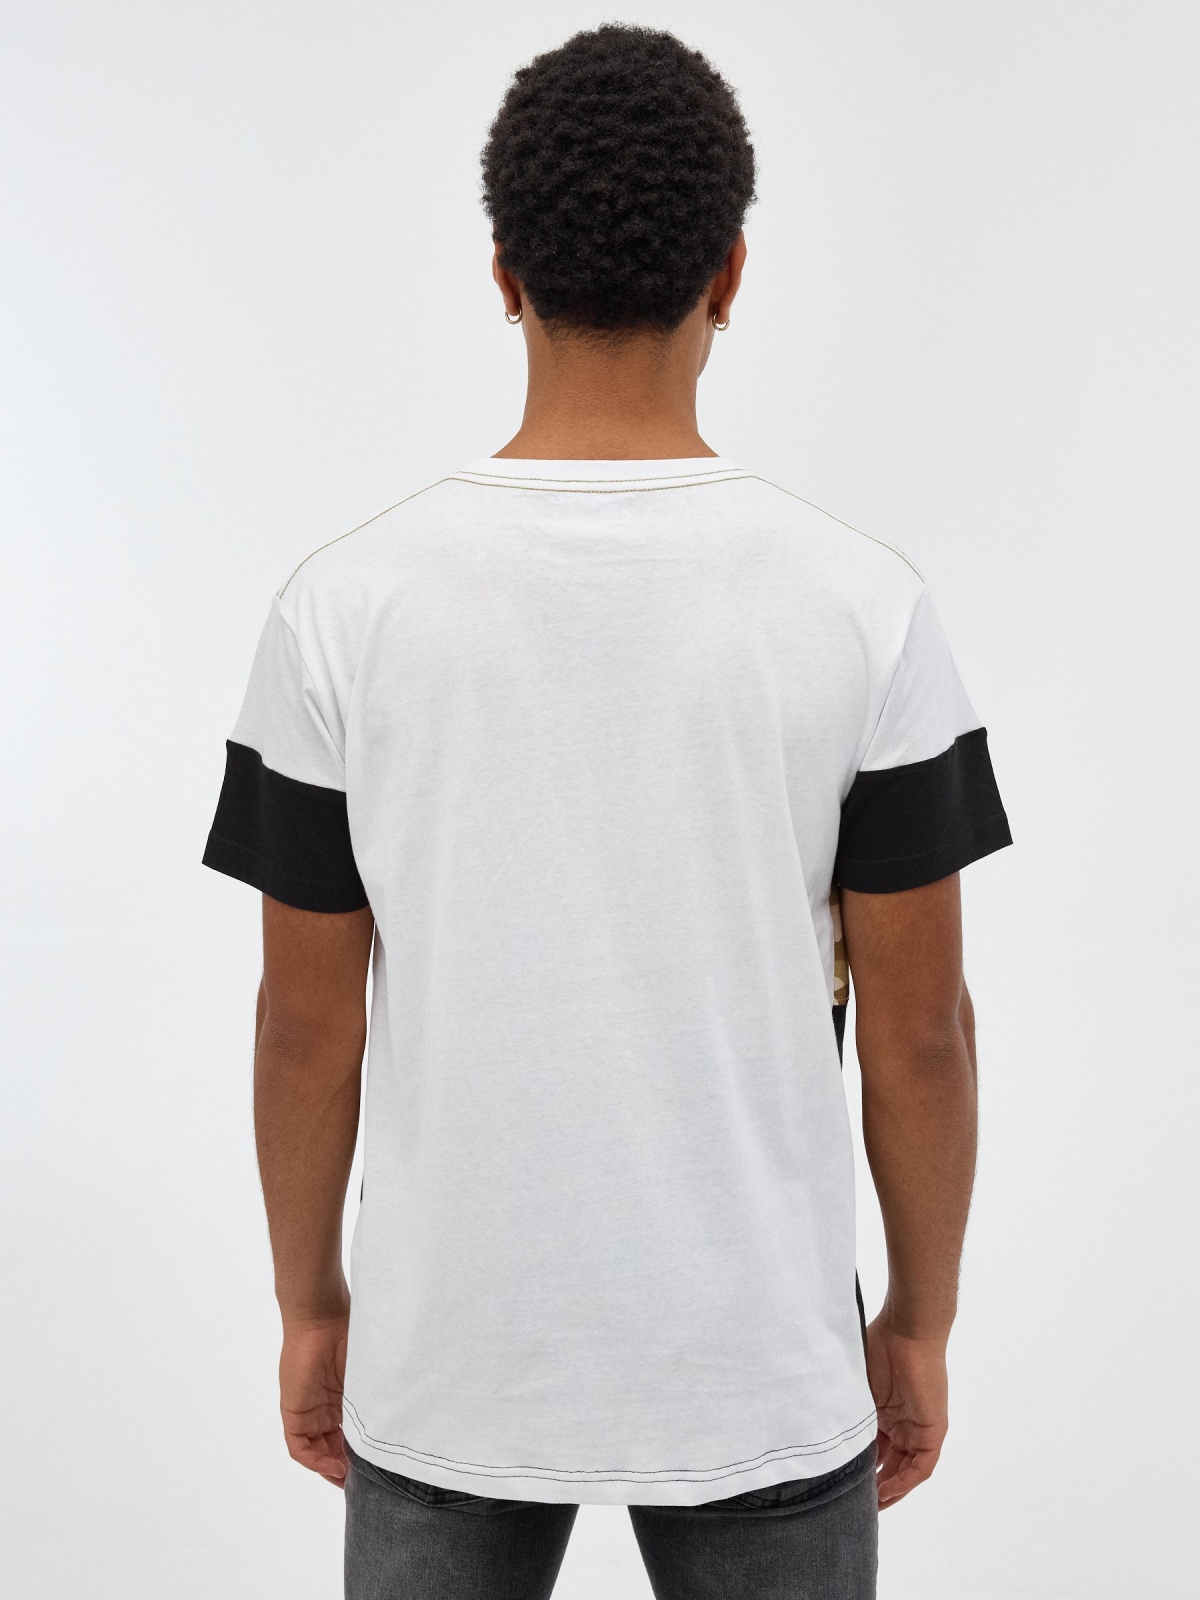 Camiseta camuflaje print blanco vista media trasera